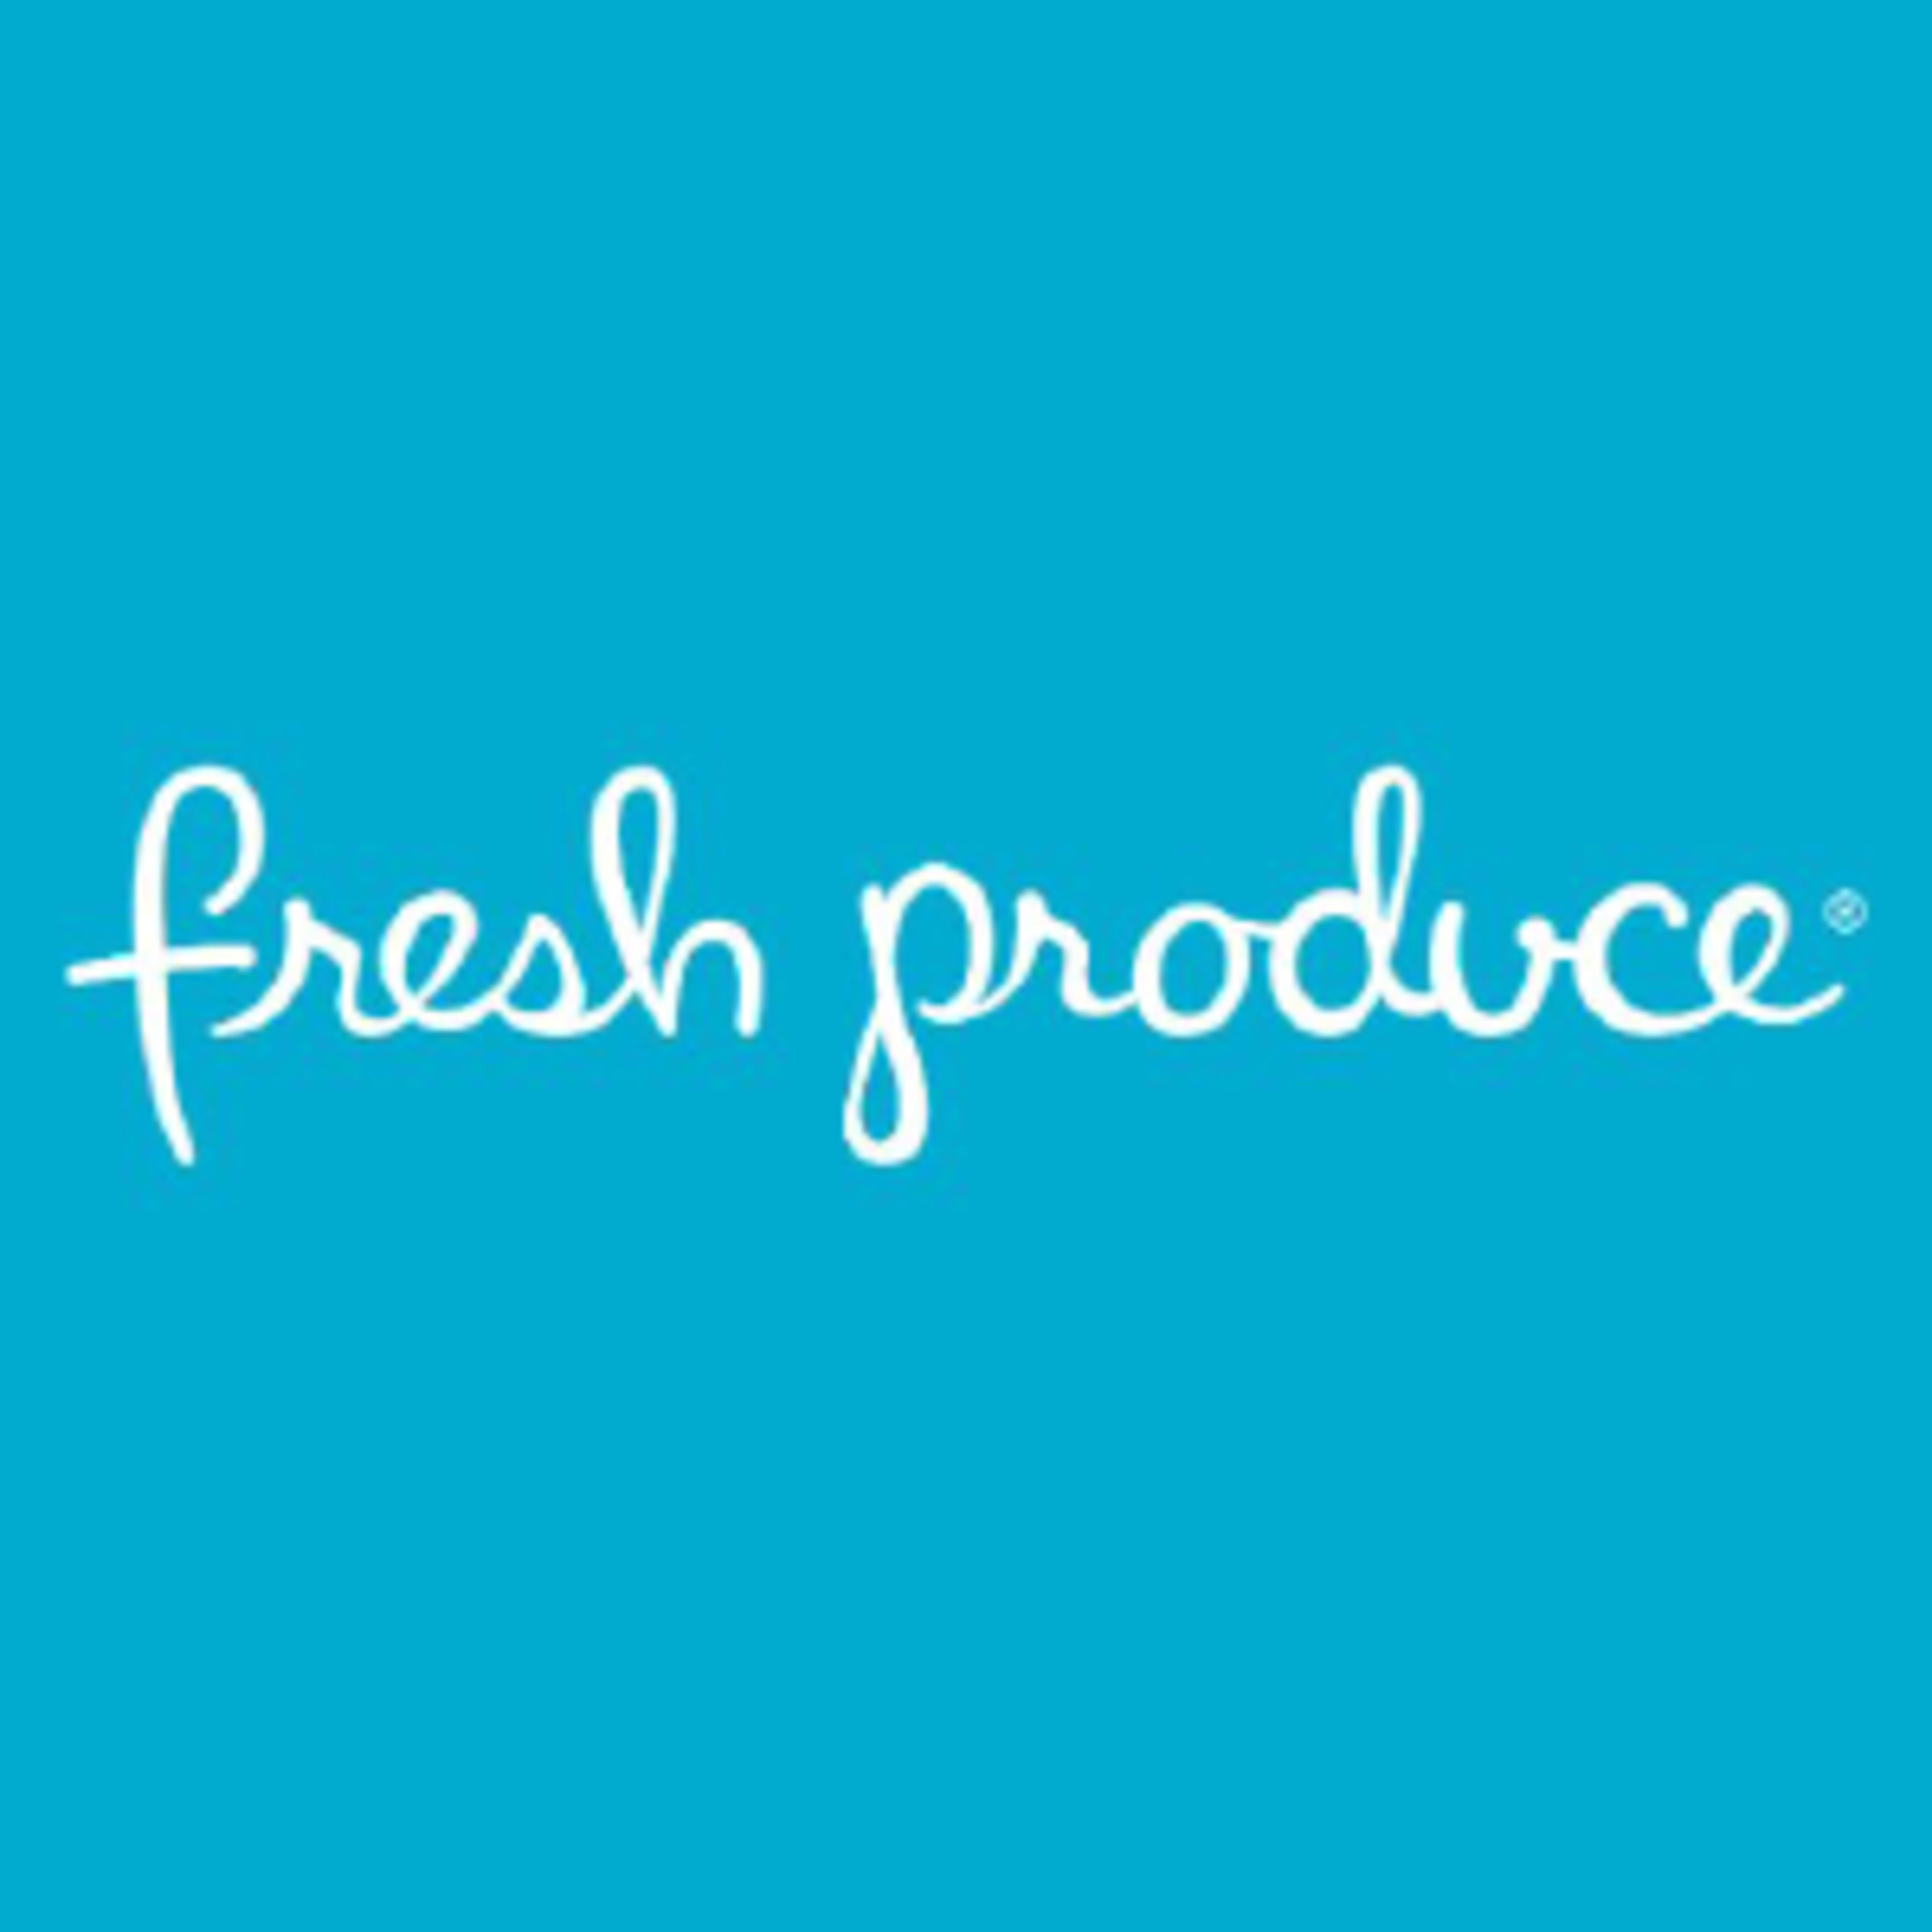 Fresh produce coupon codes